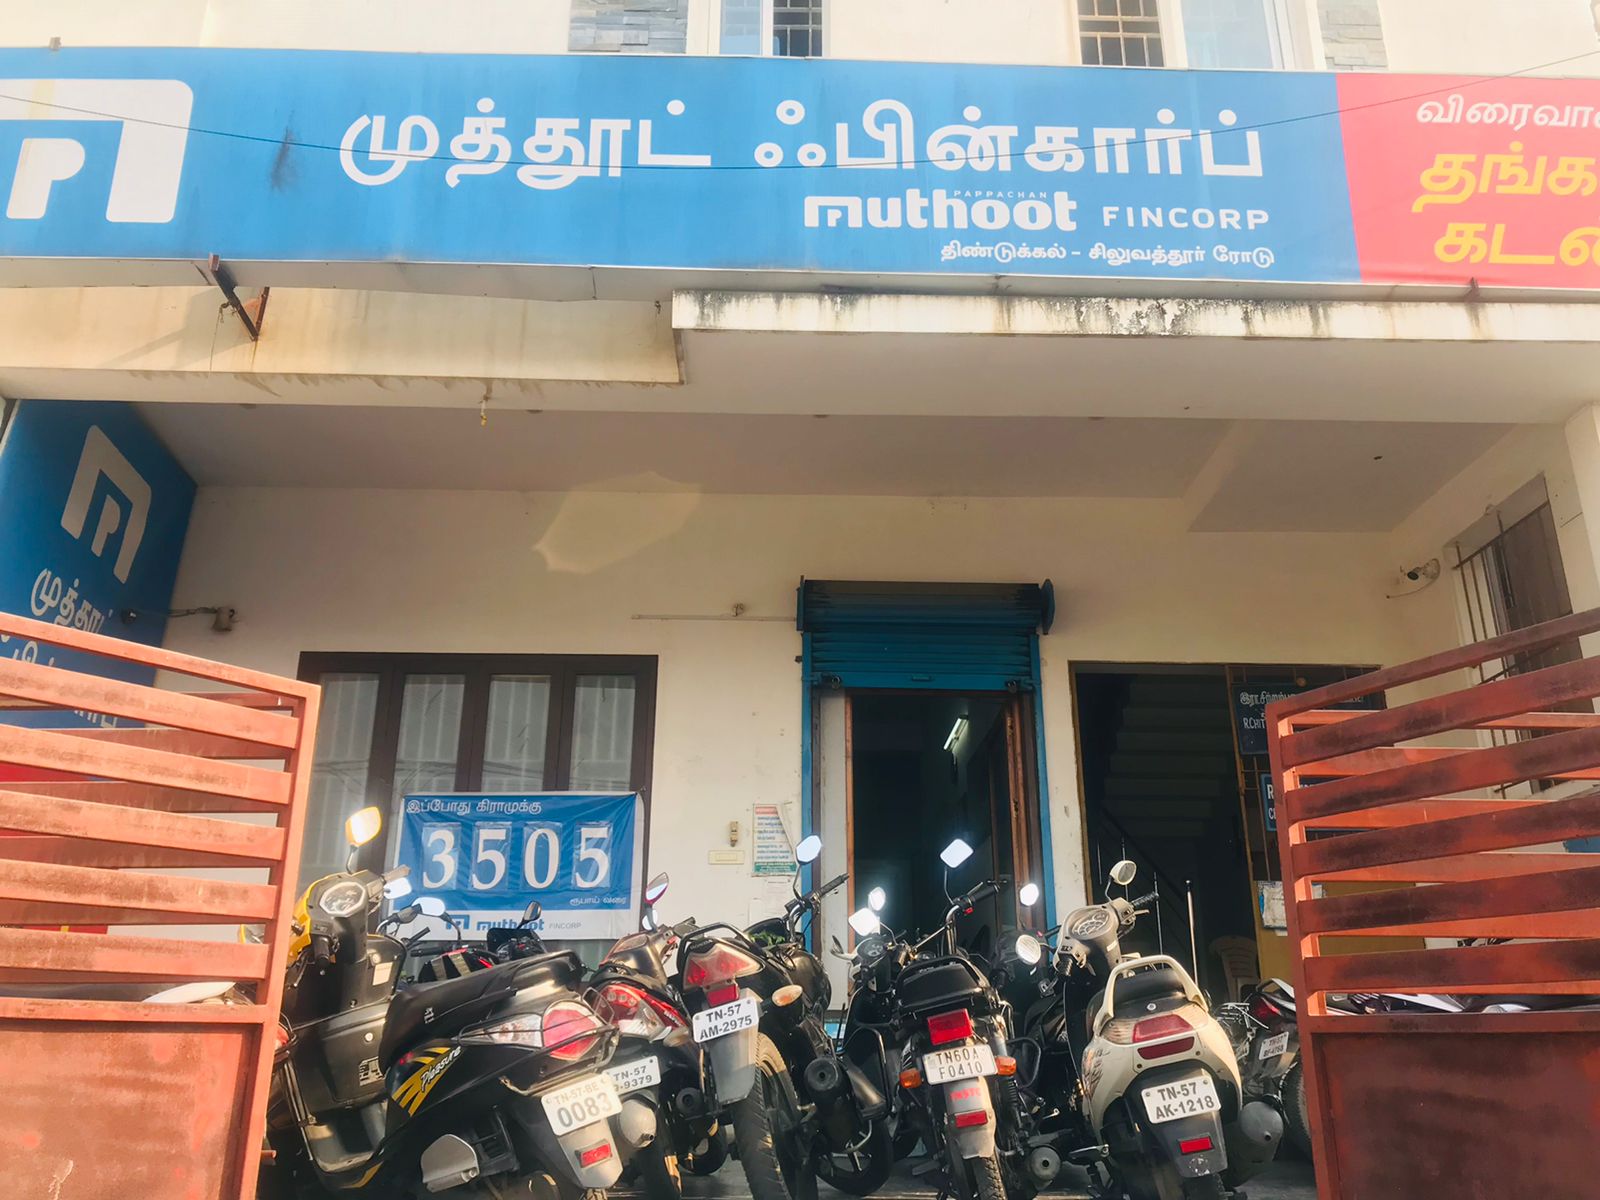 Muthoot Fincorp Gold Loan Services in Balakrishnapuram, Dindigul, Tamil Nadu